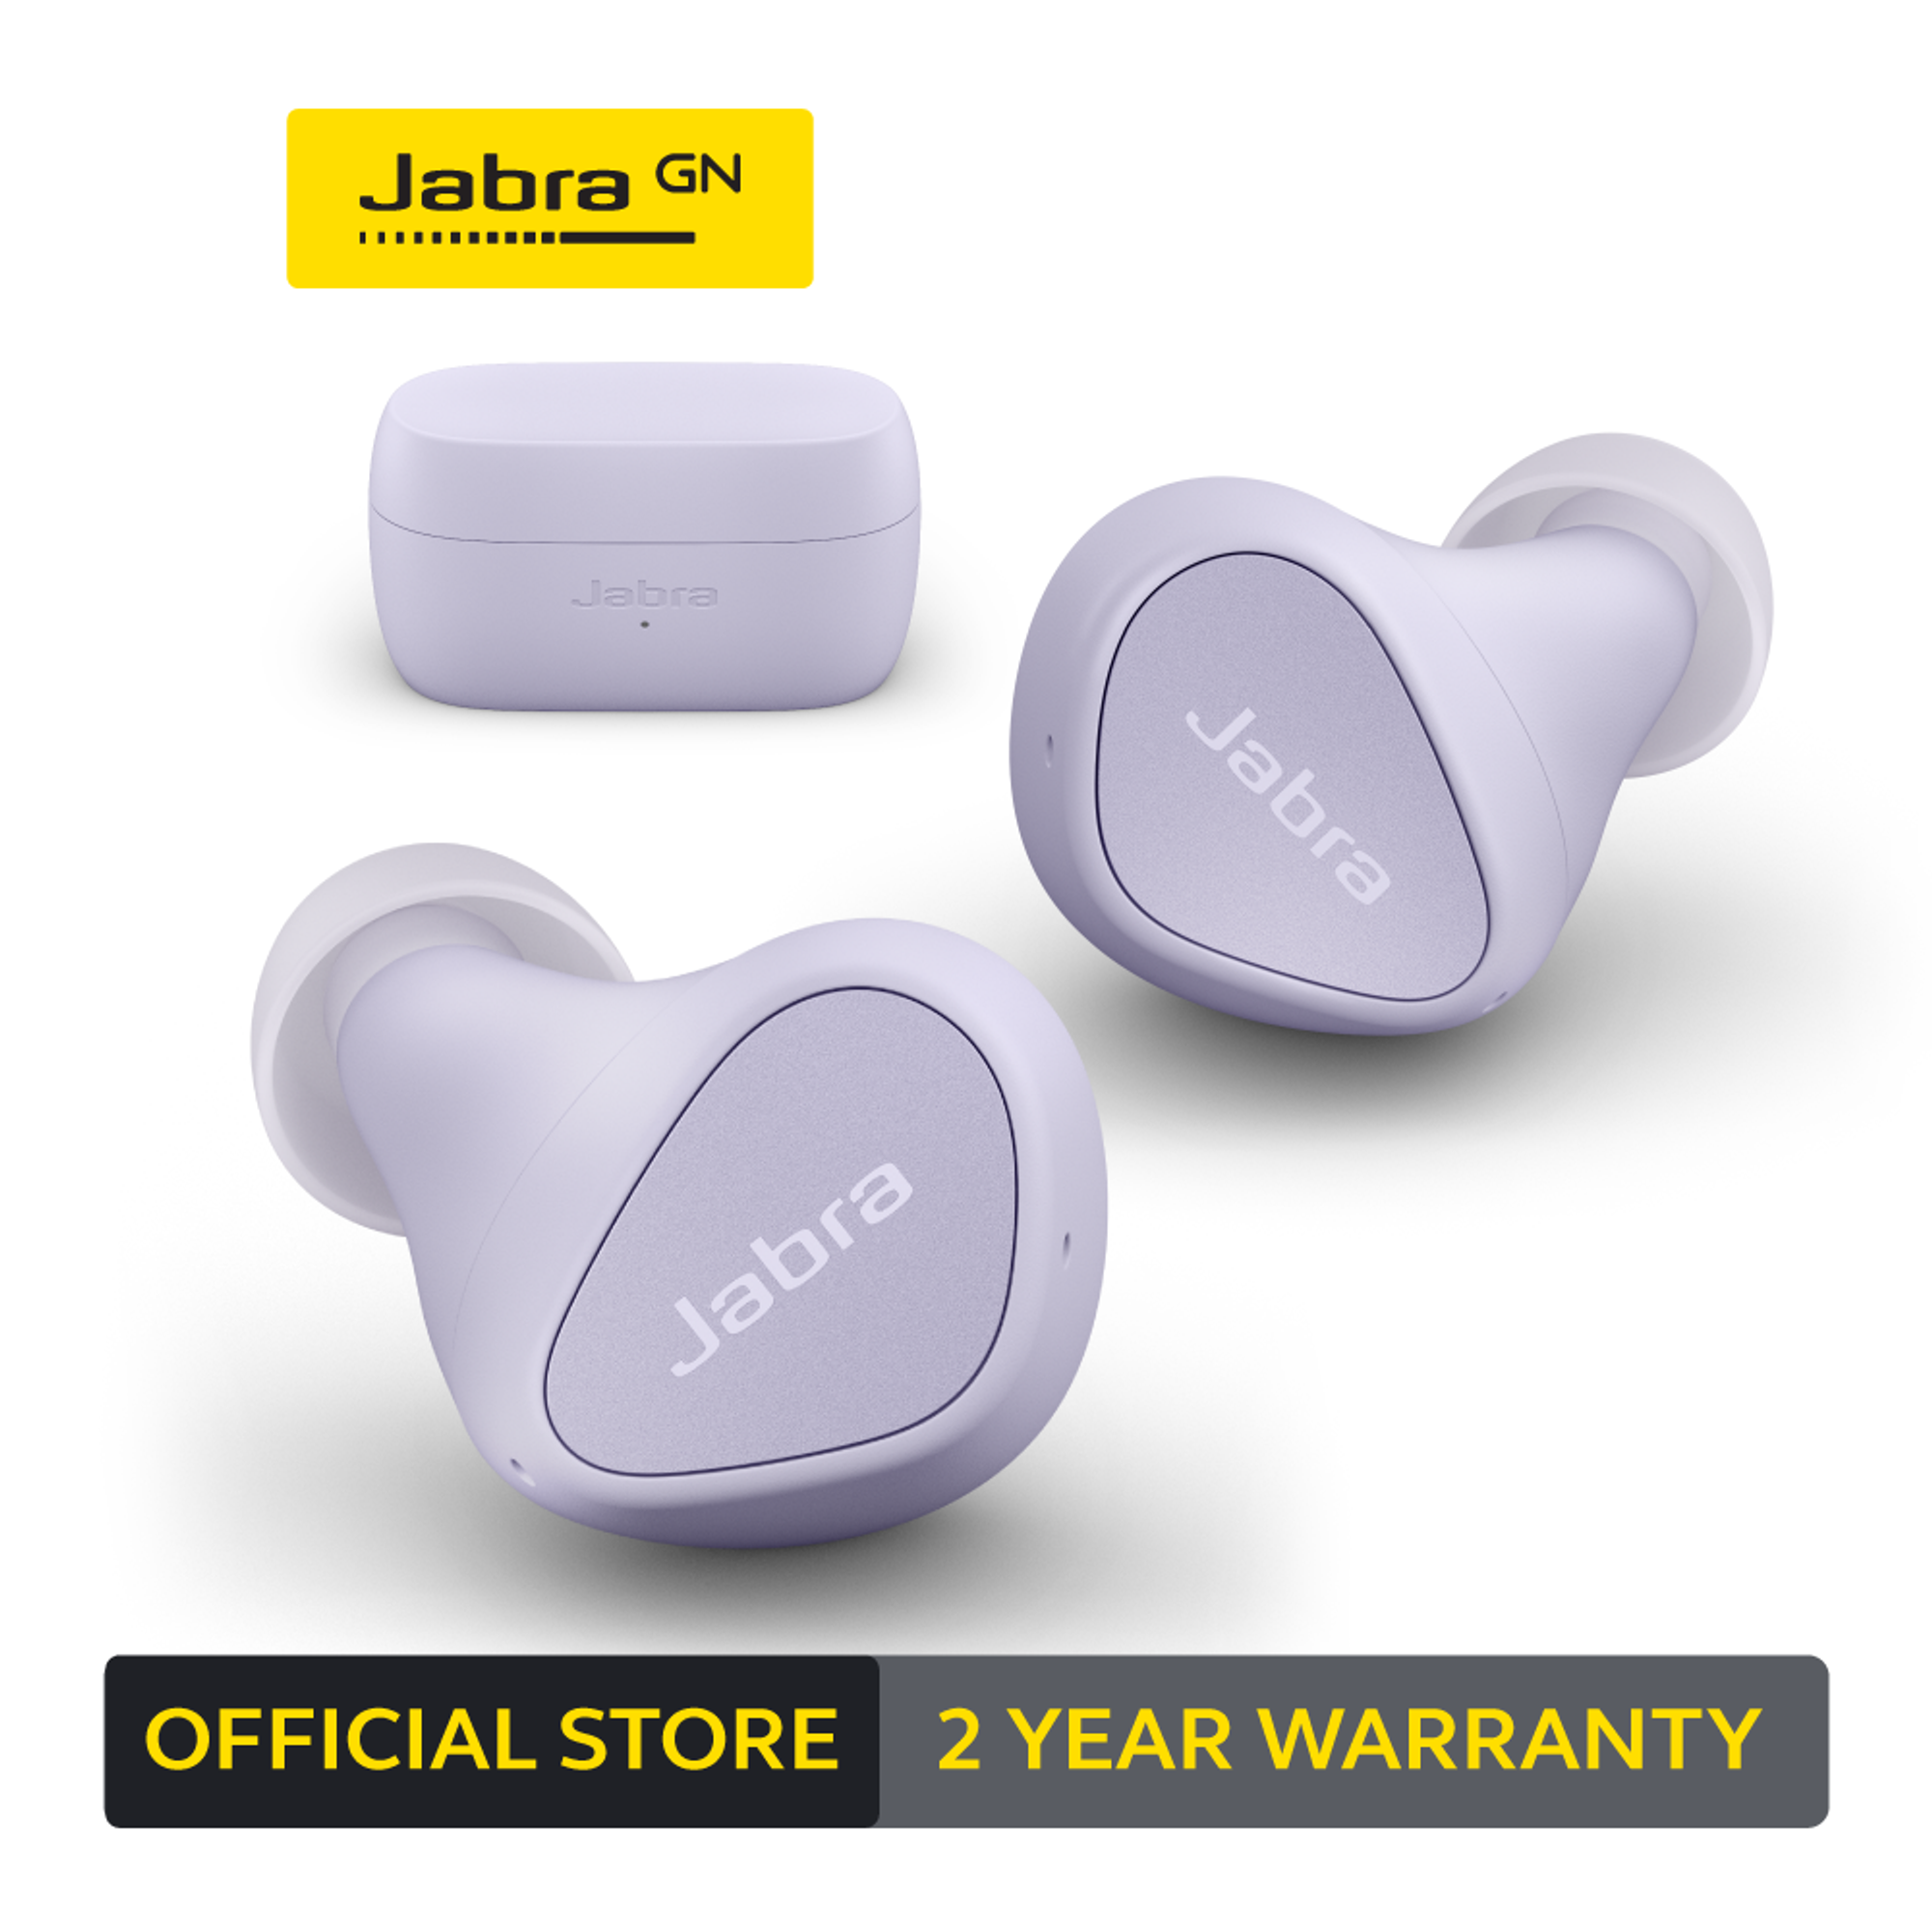 Jabra Elite 3 with Noise Isolation Bluetooth Headset Price in